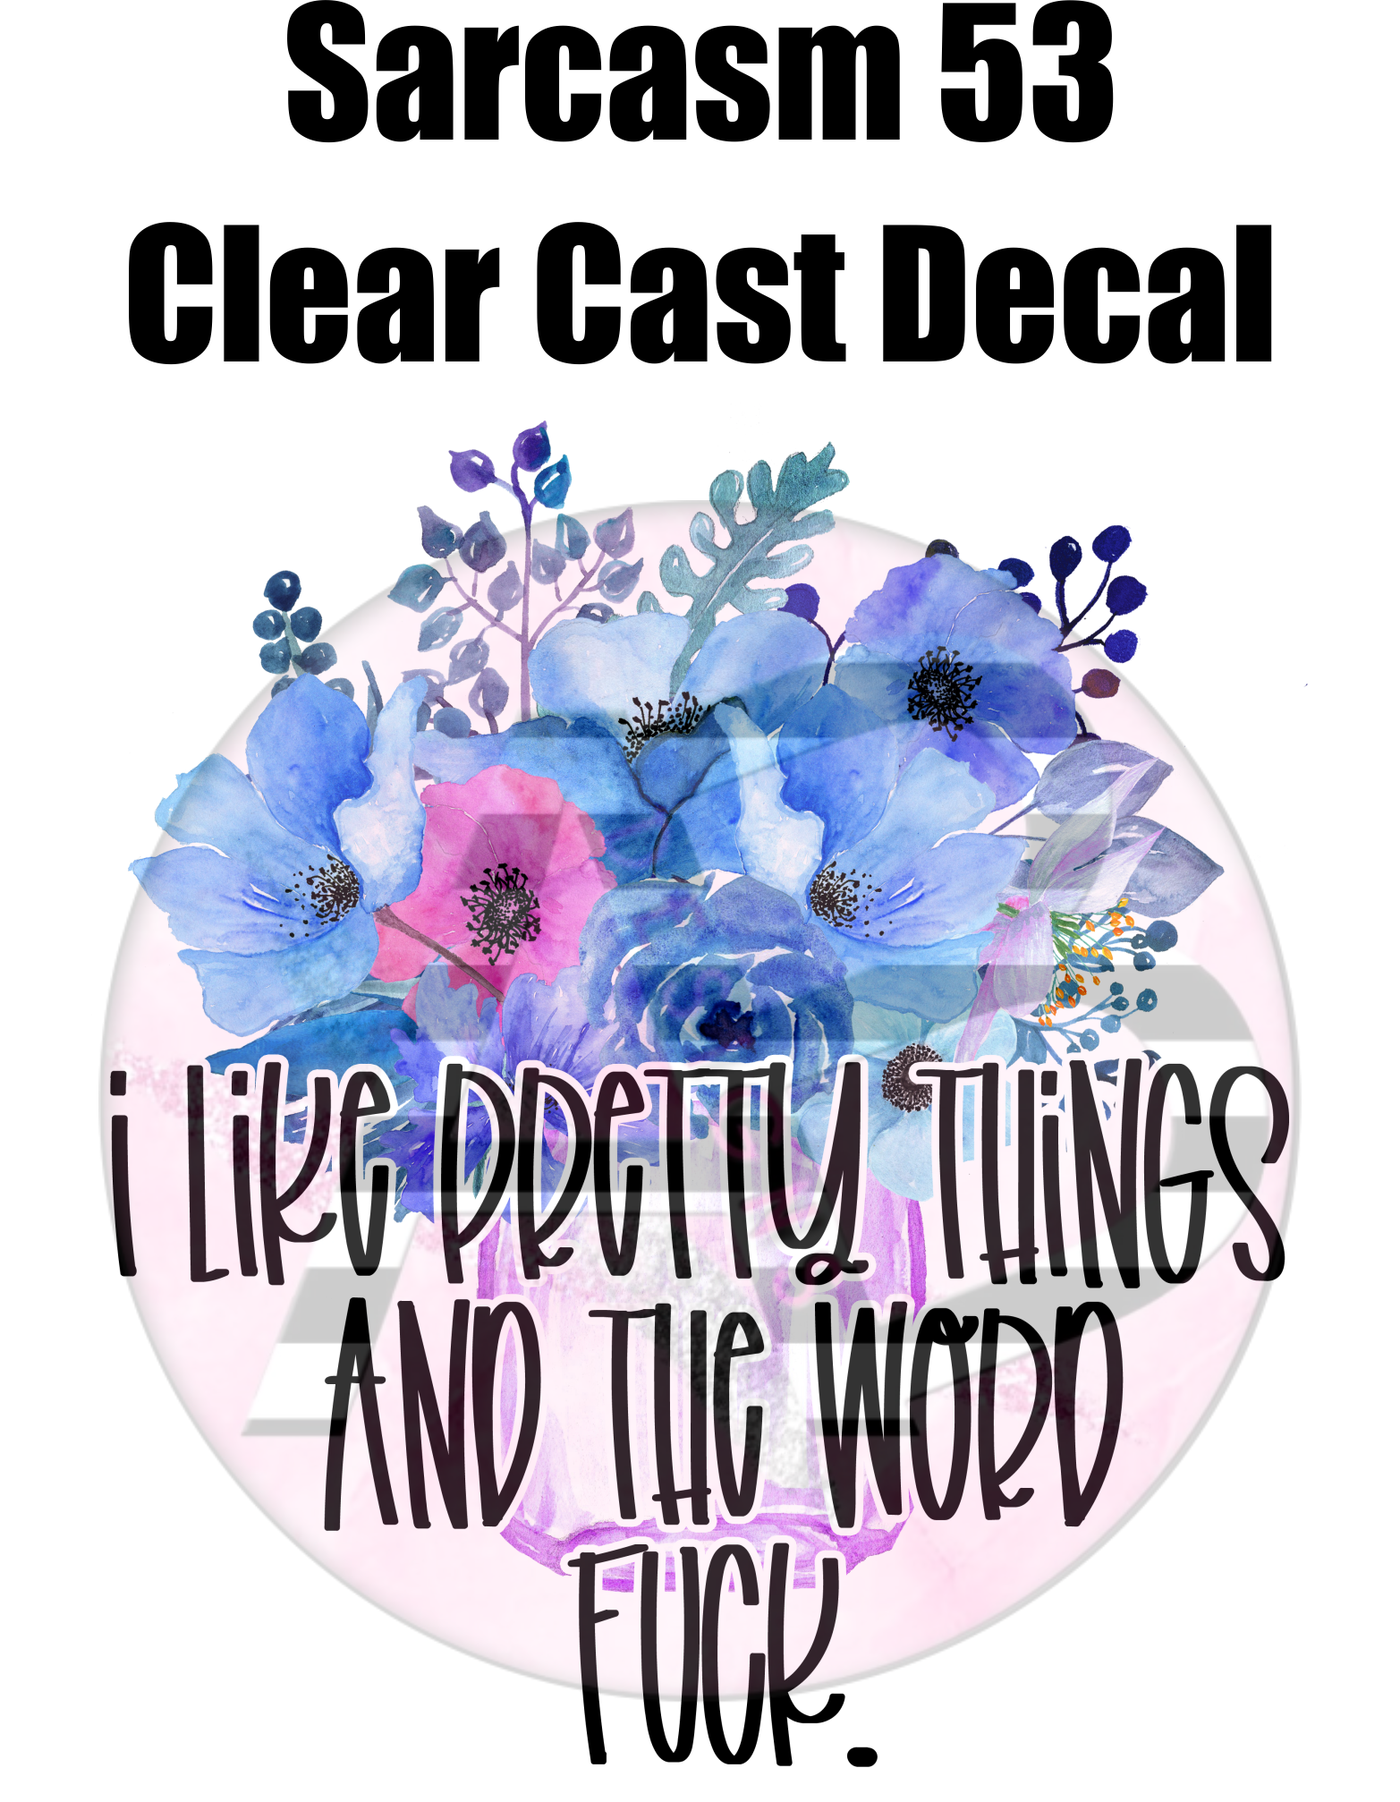 Sarcasm 53 - Clear Cast Decal